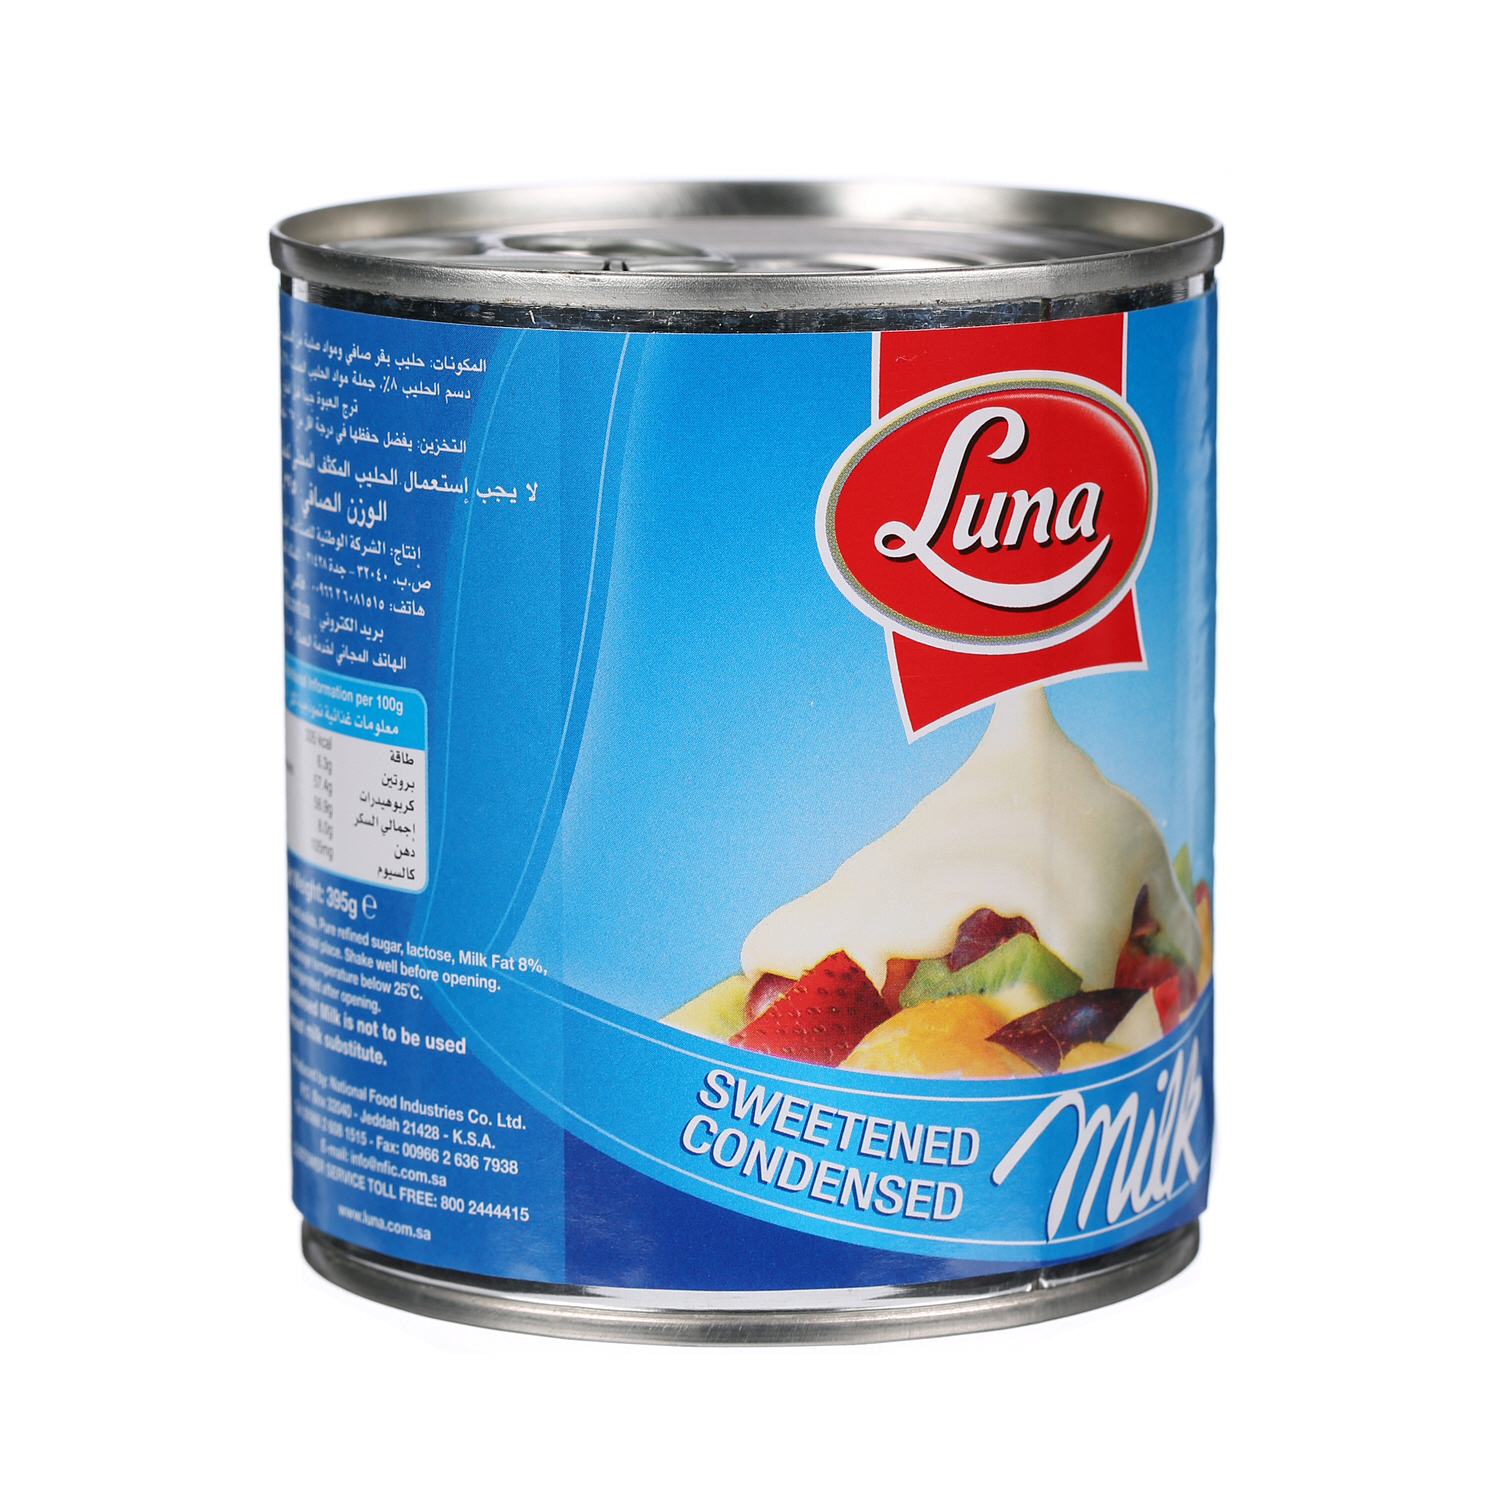 Luna Sweetened Condensed Milk 395ml